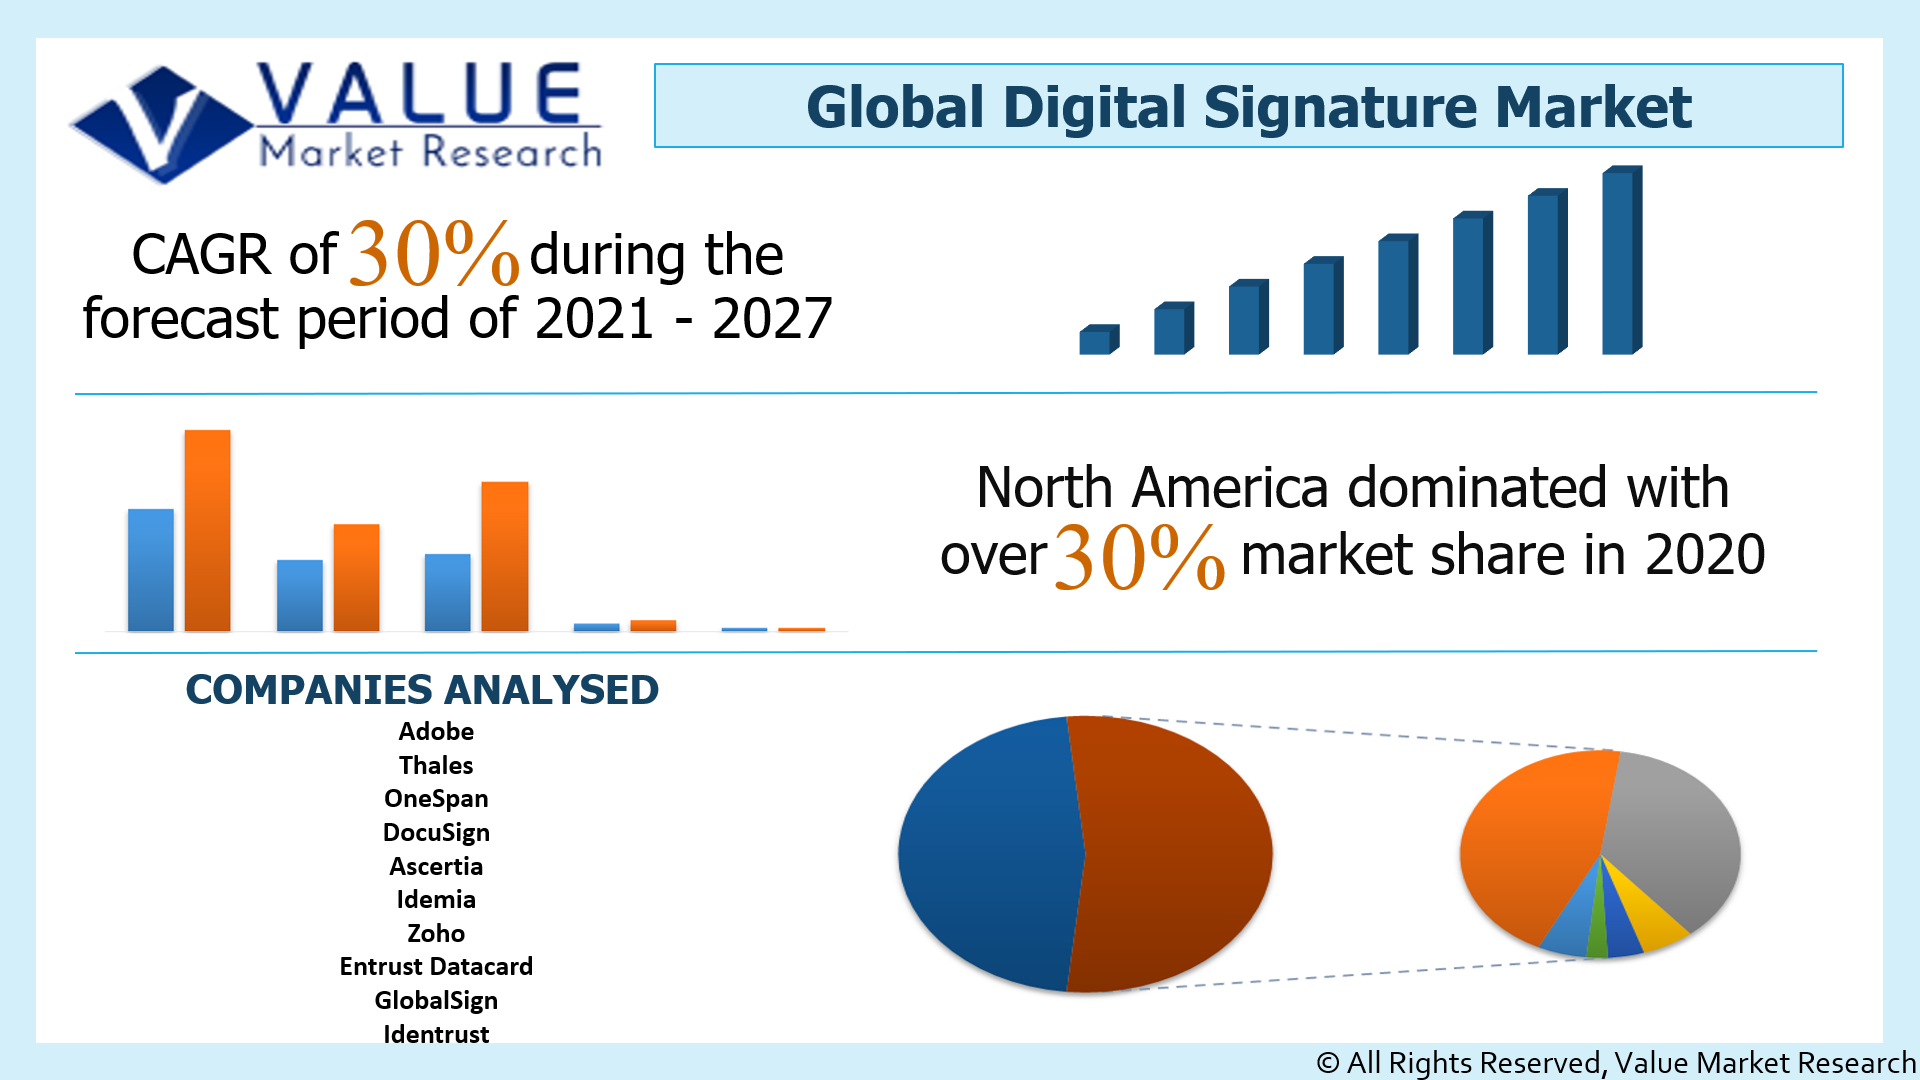 Global Digital Signature Market Share